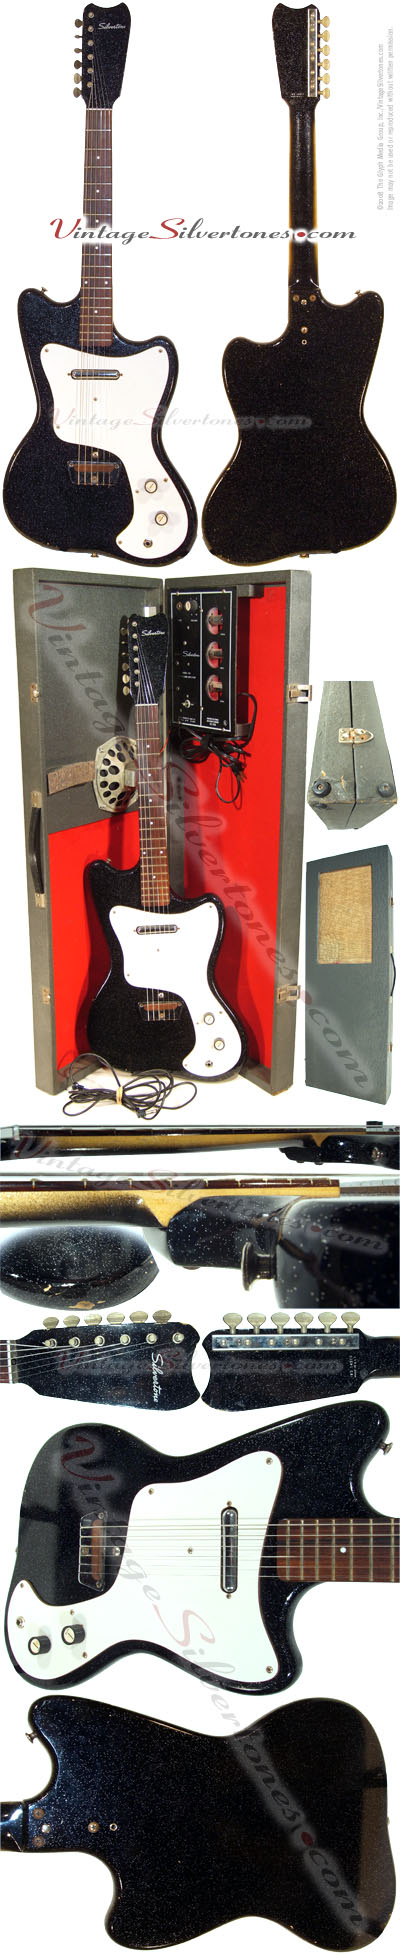 Silvertone 1451-Danelectro-made 1 pickup, electric guitar amp in case, 1966, black